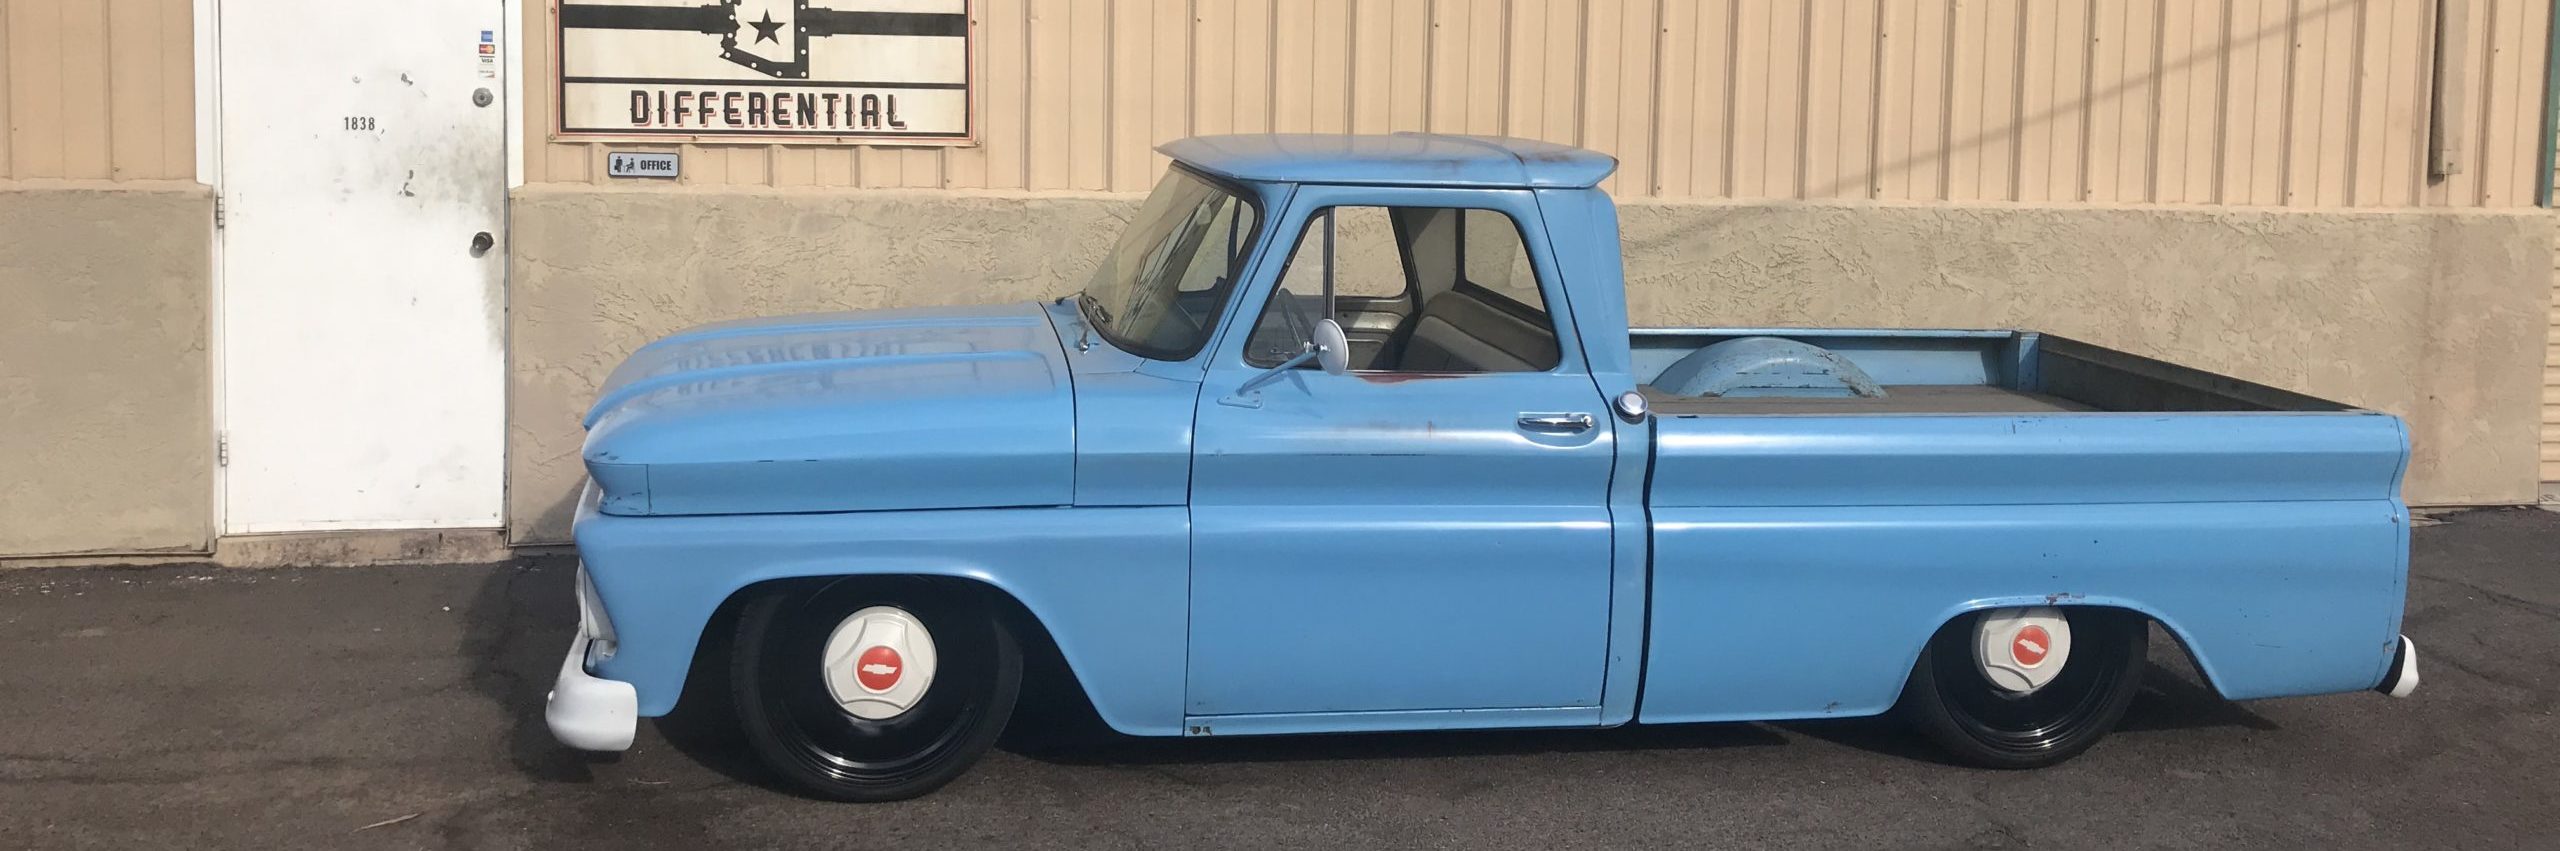 Classic Blue pick-up truck